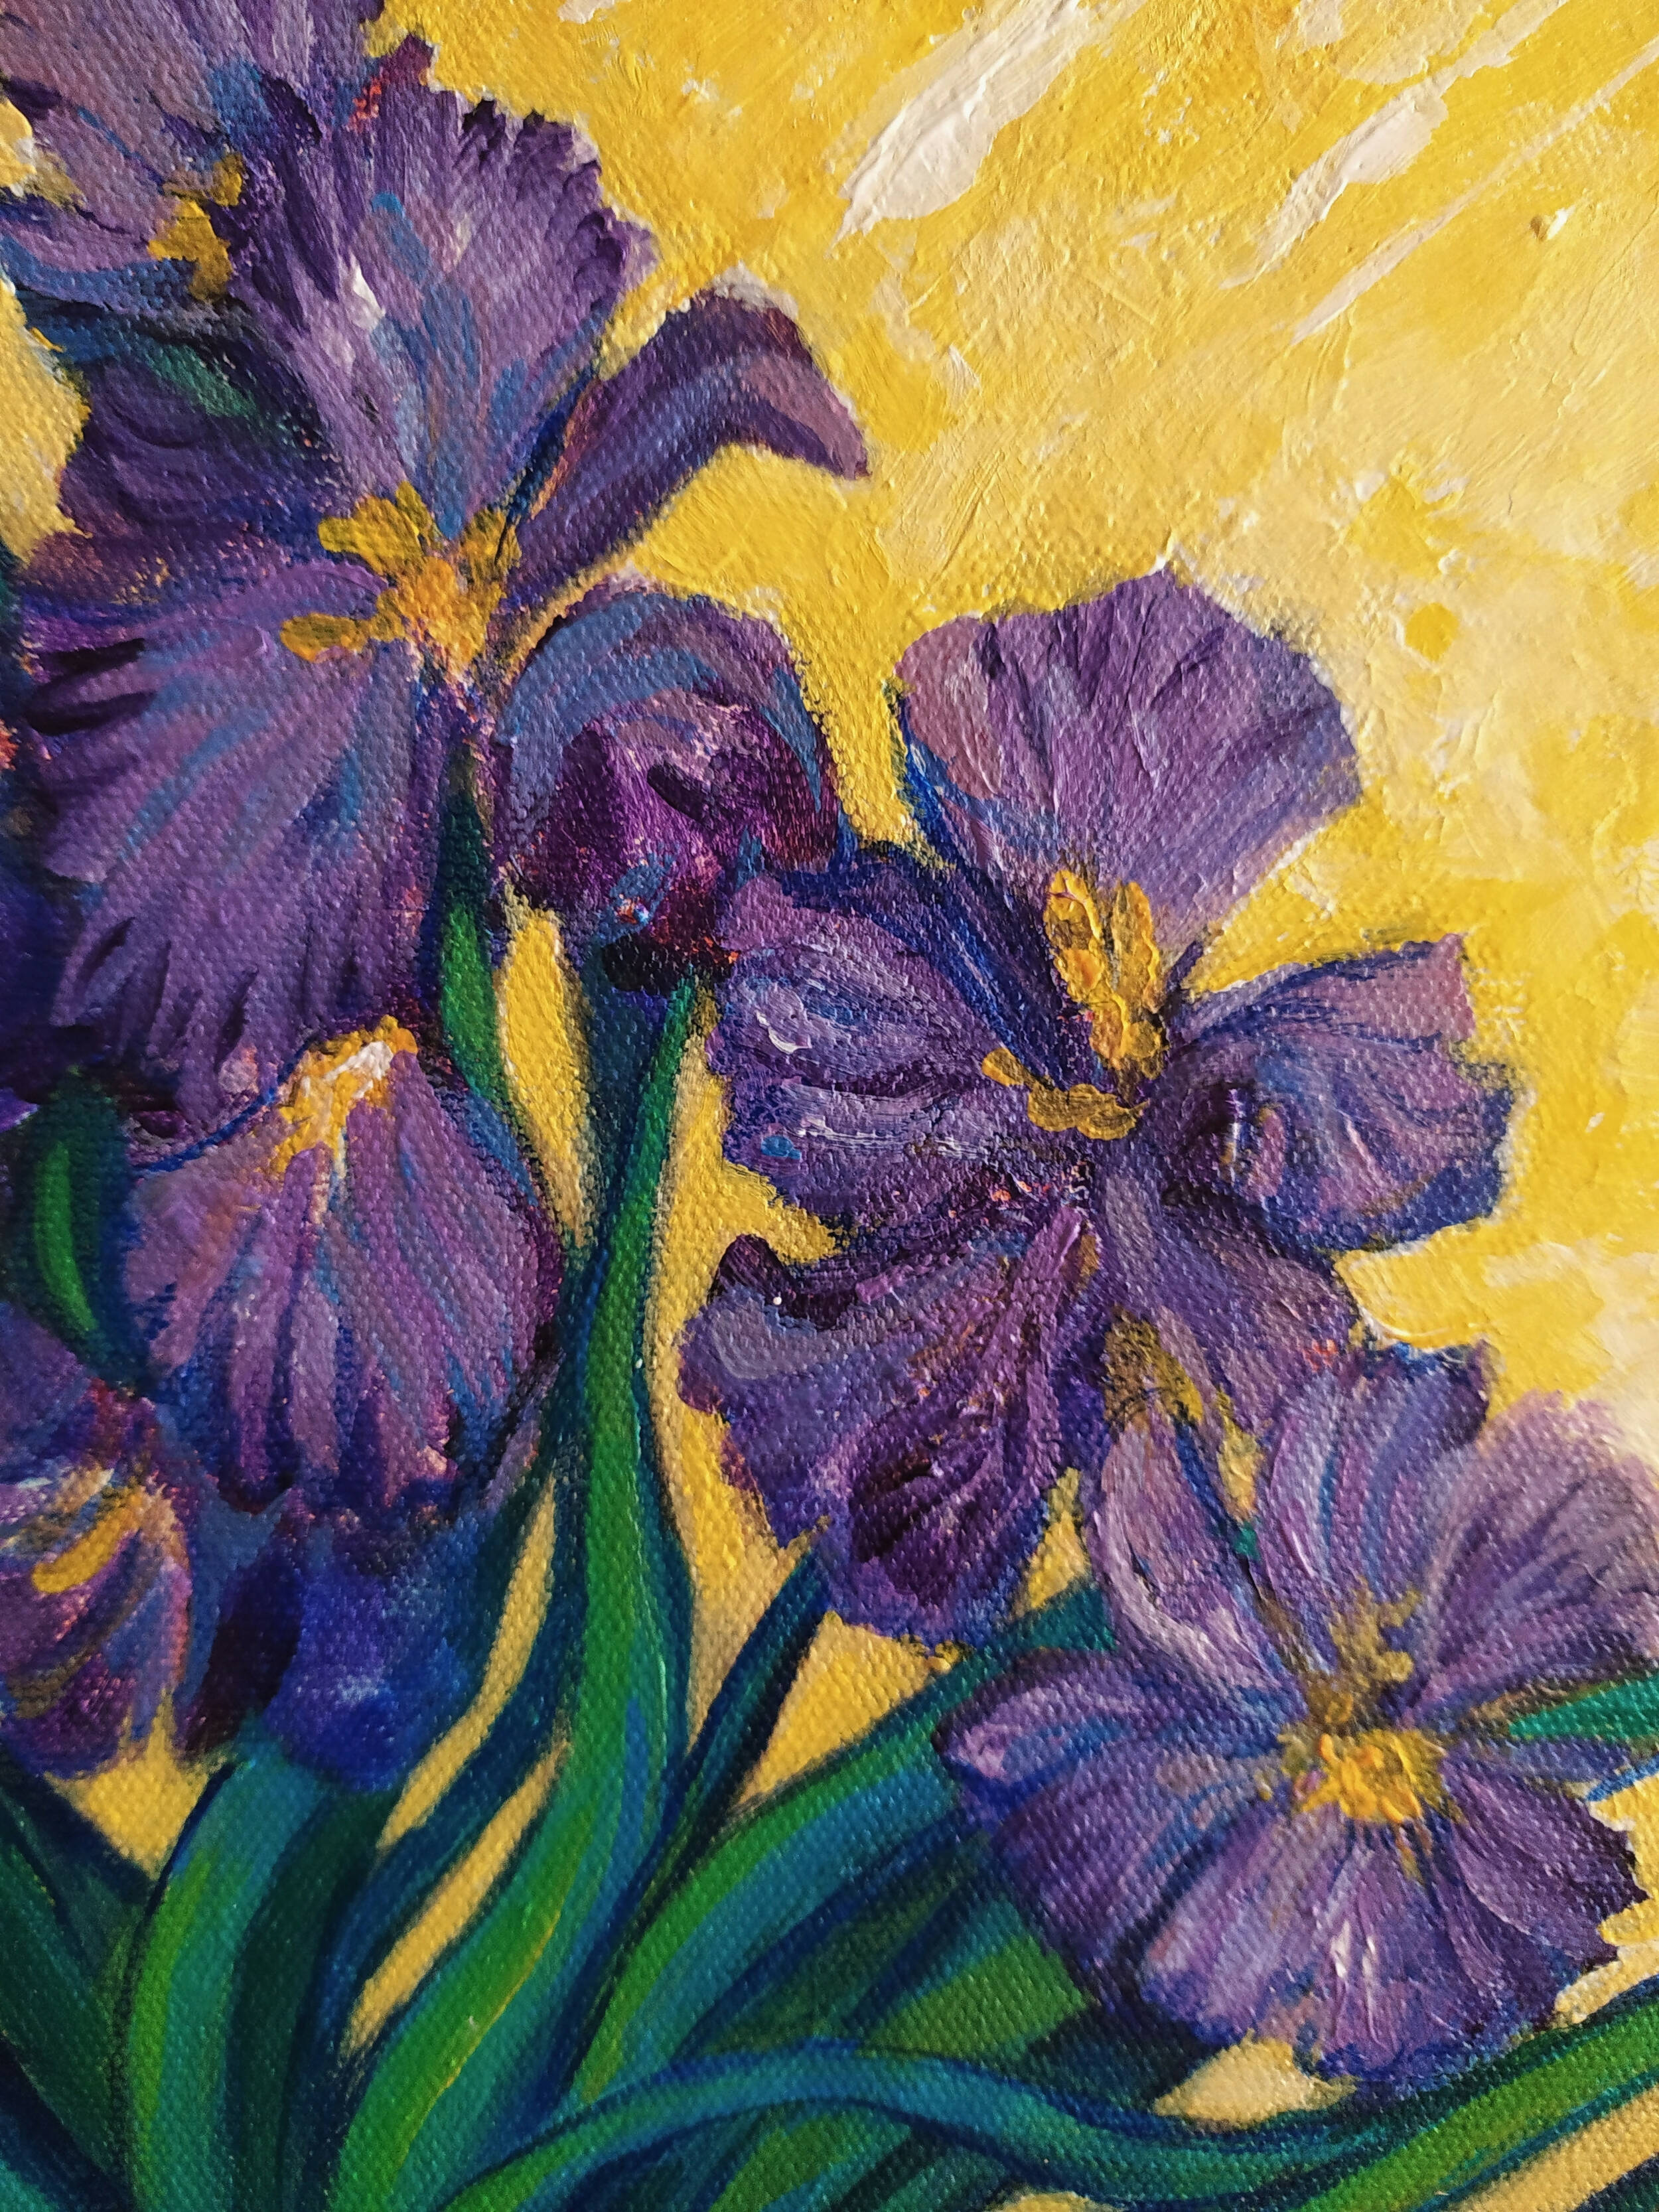 Iris painting, acrylic painting on canvas panel